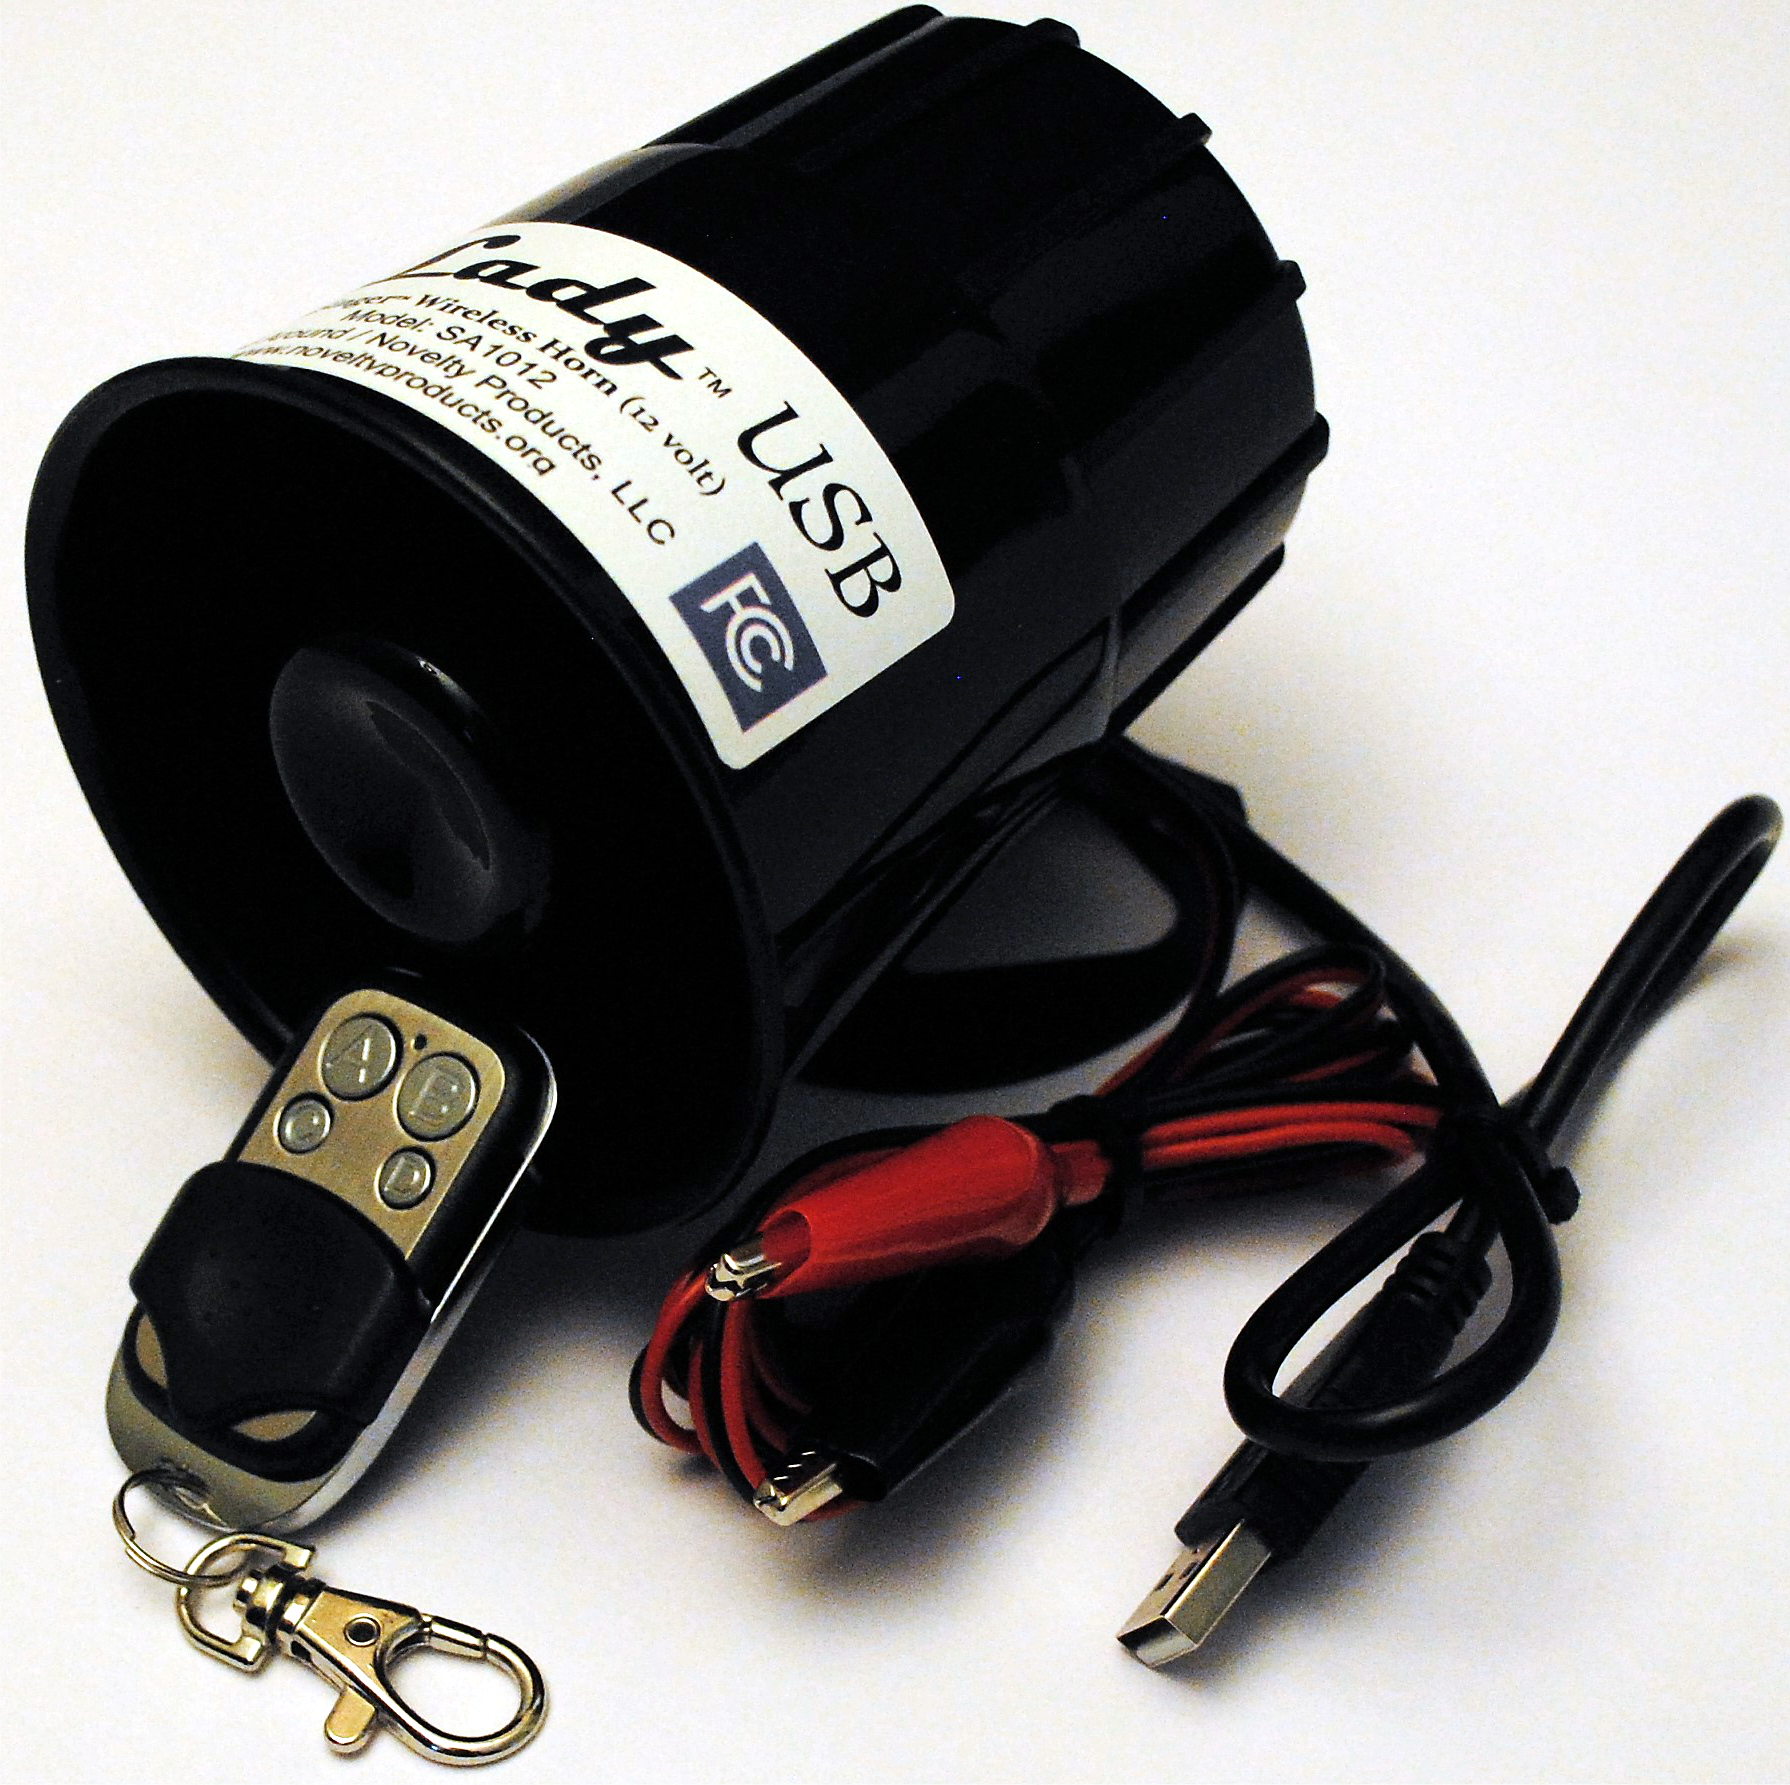 University of Oregon USB Car Horn with Wireless KeyFOB Remote